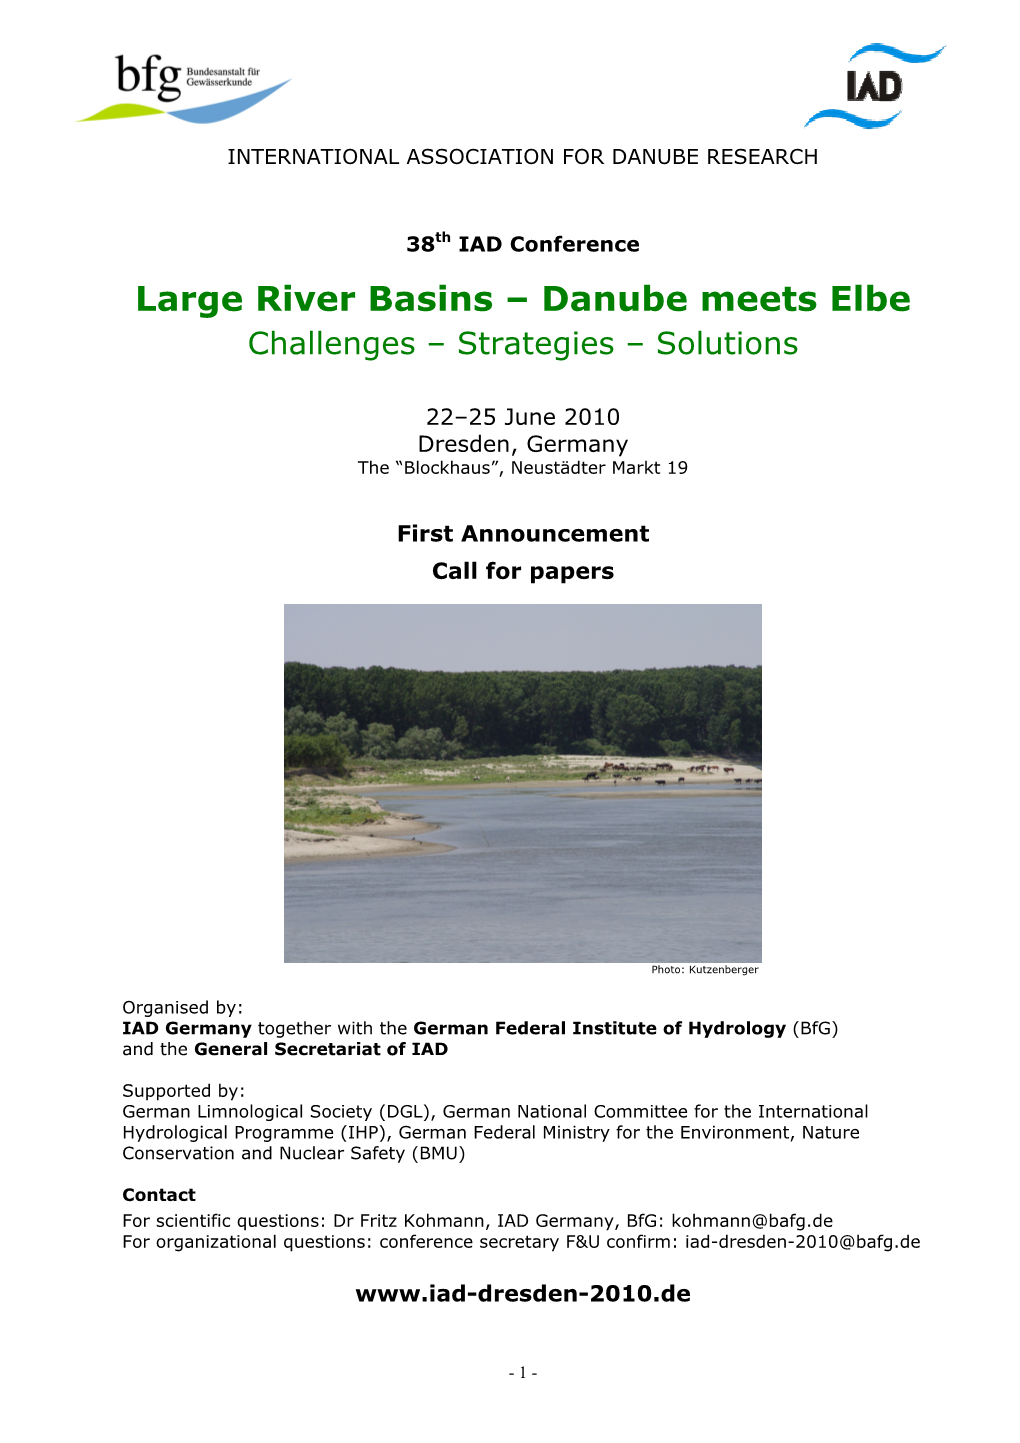 Large River Basins – Danube Meets Elbe Challenges – Strategies – Solutions